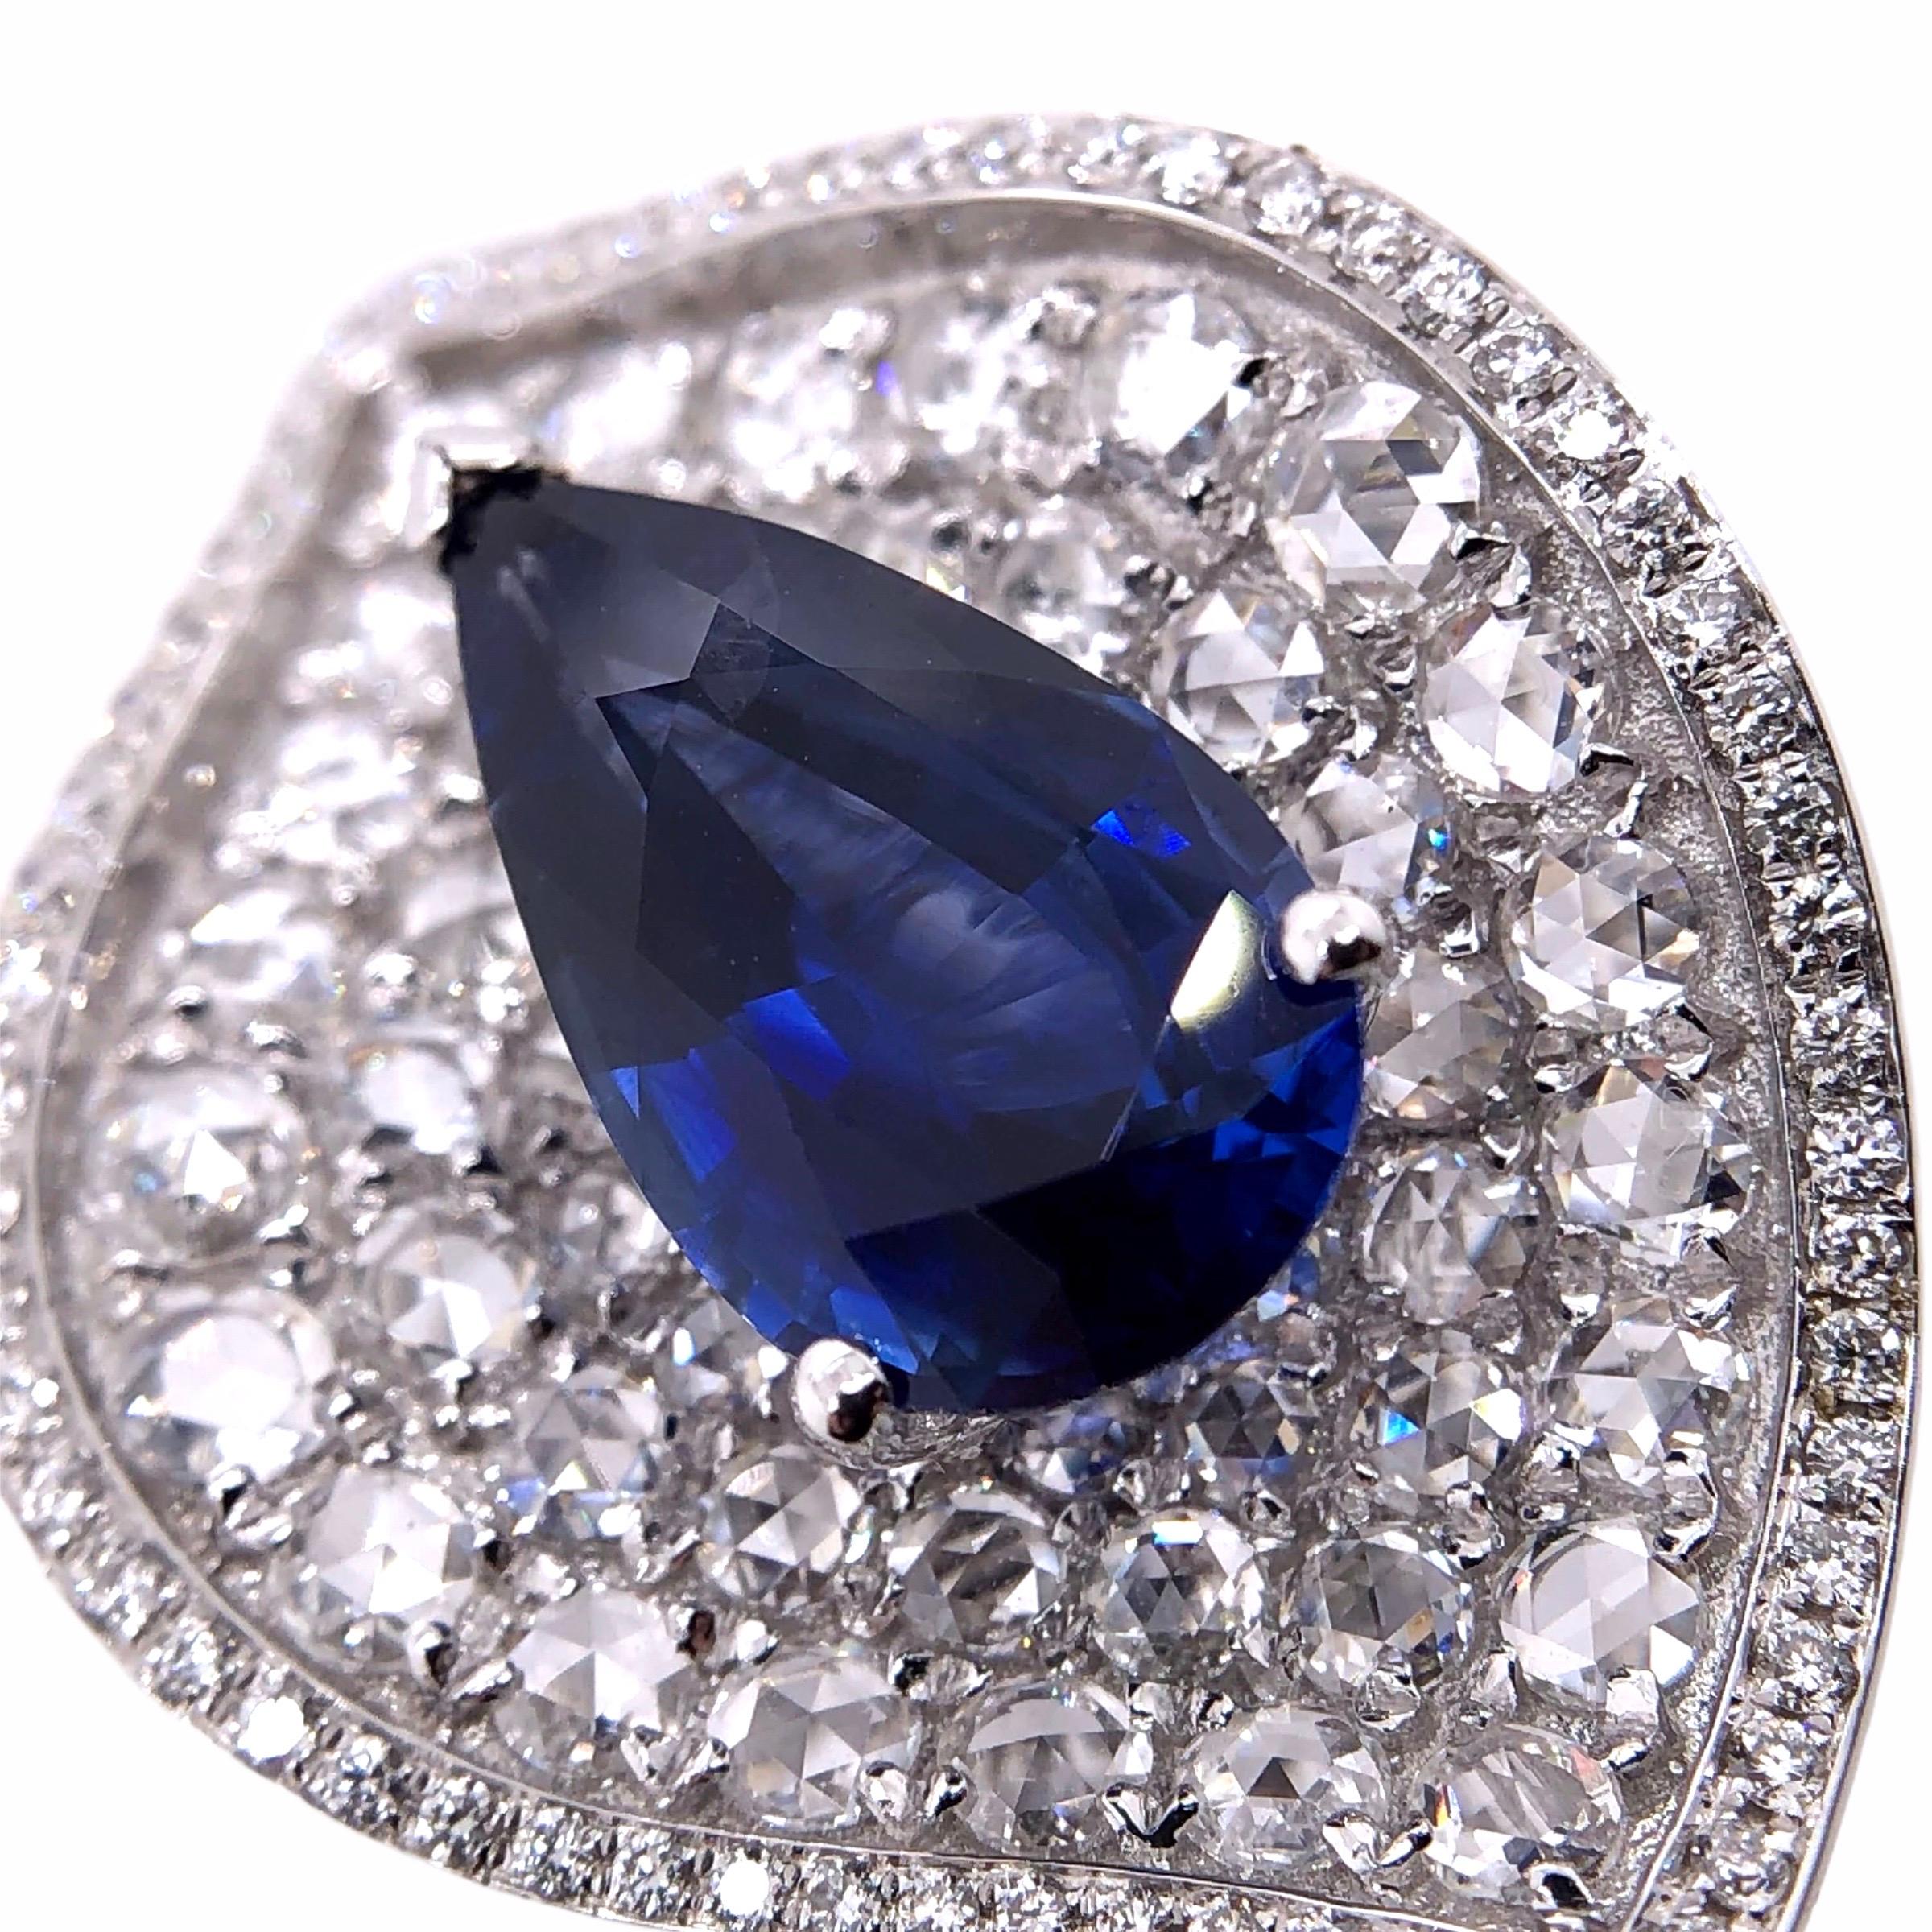 PARIS Craft House 4.47ct Blue Sapphire Diamond Cocktail Ring in 18 Karat White Gold.

- 1 Pear-cut Blue Sapphire/4.47ct
- 56 Rose-cut Diamonds/2.16ct
- 116 Round Diamonds/0.34ct
- 18K White Gold/13.02g

Designed and crafted at PARIS Craft House.